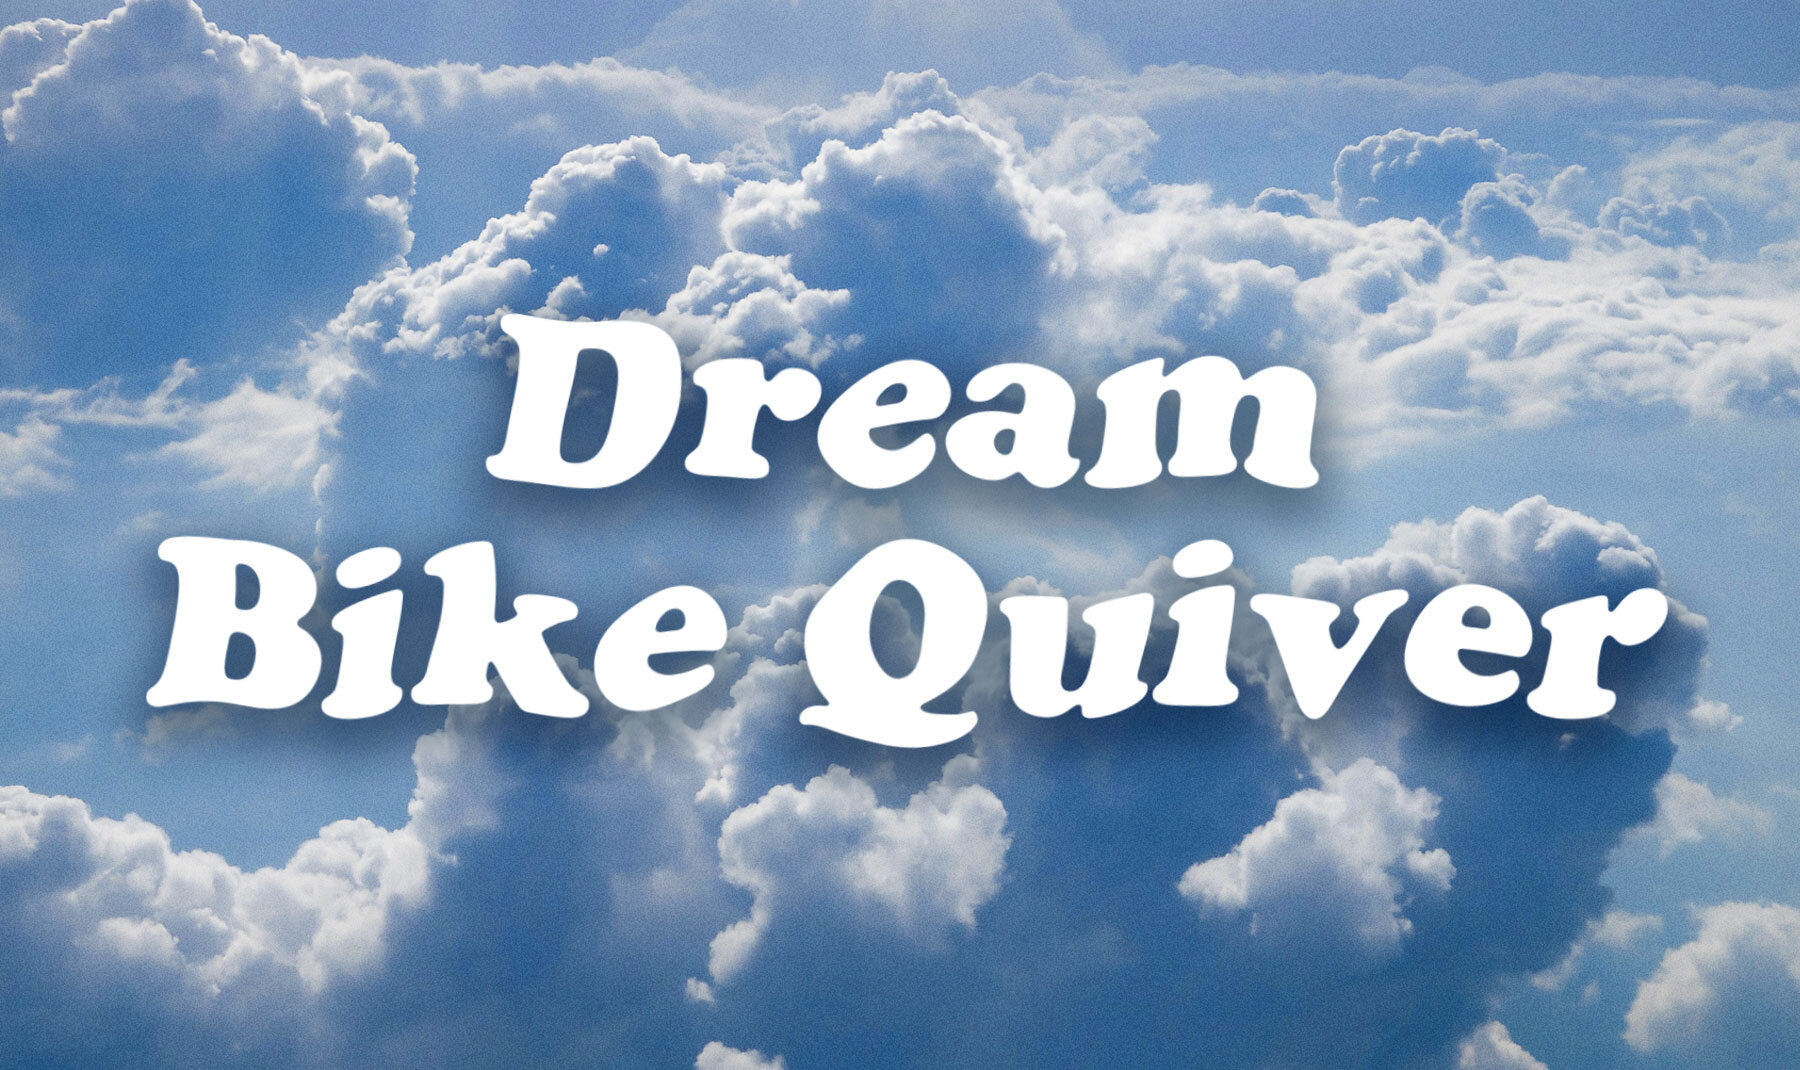 Dream mountain bike quiver